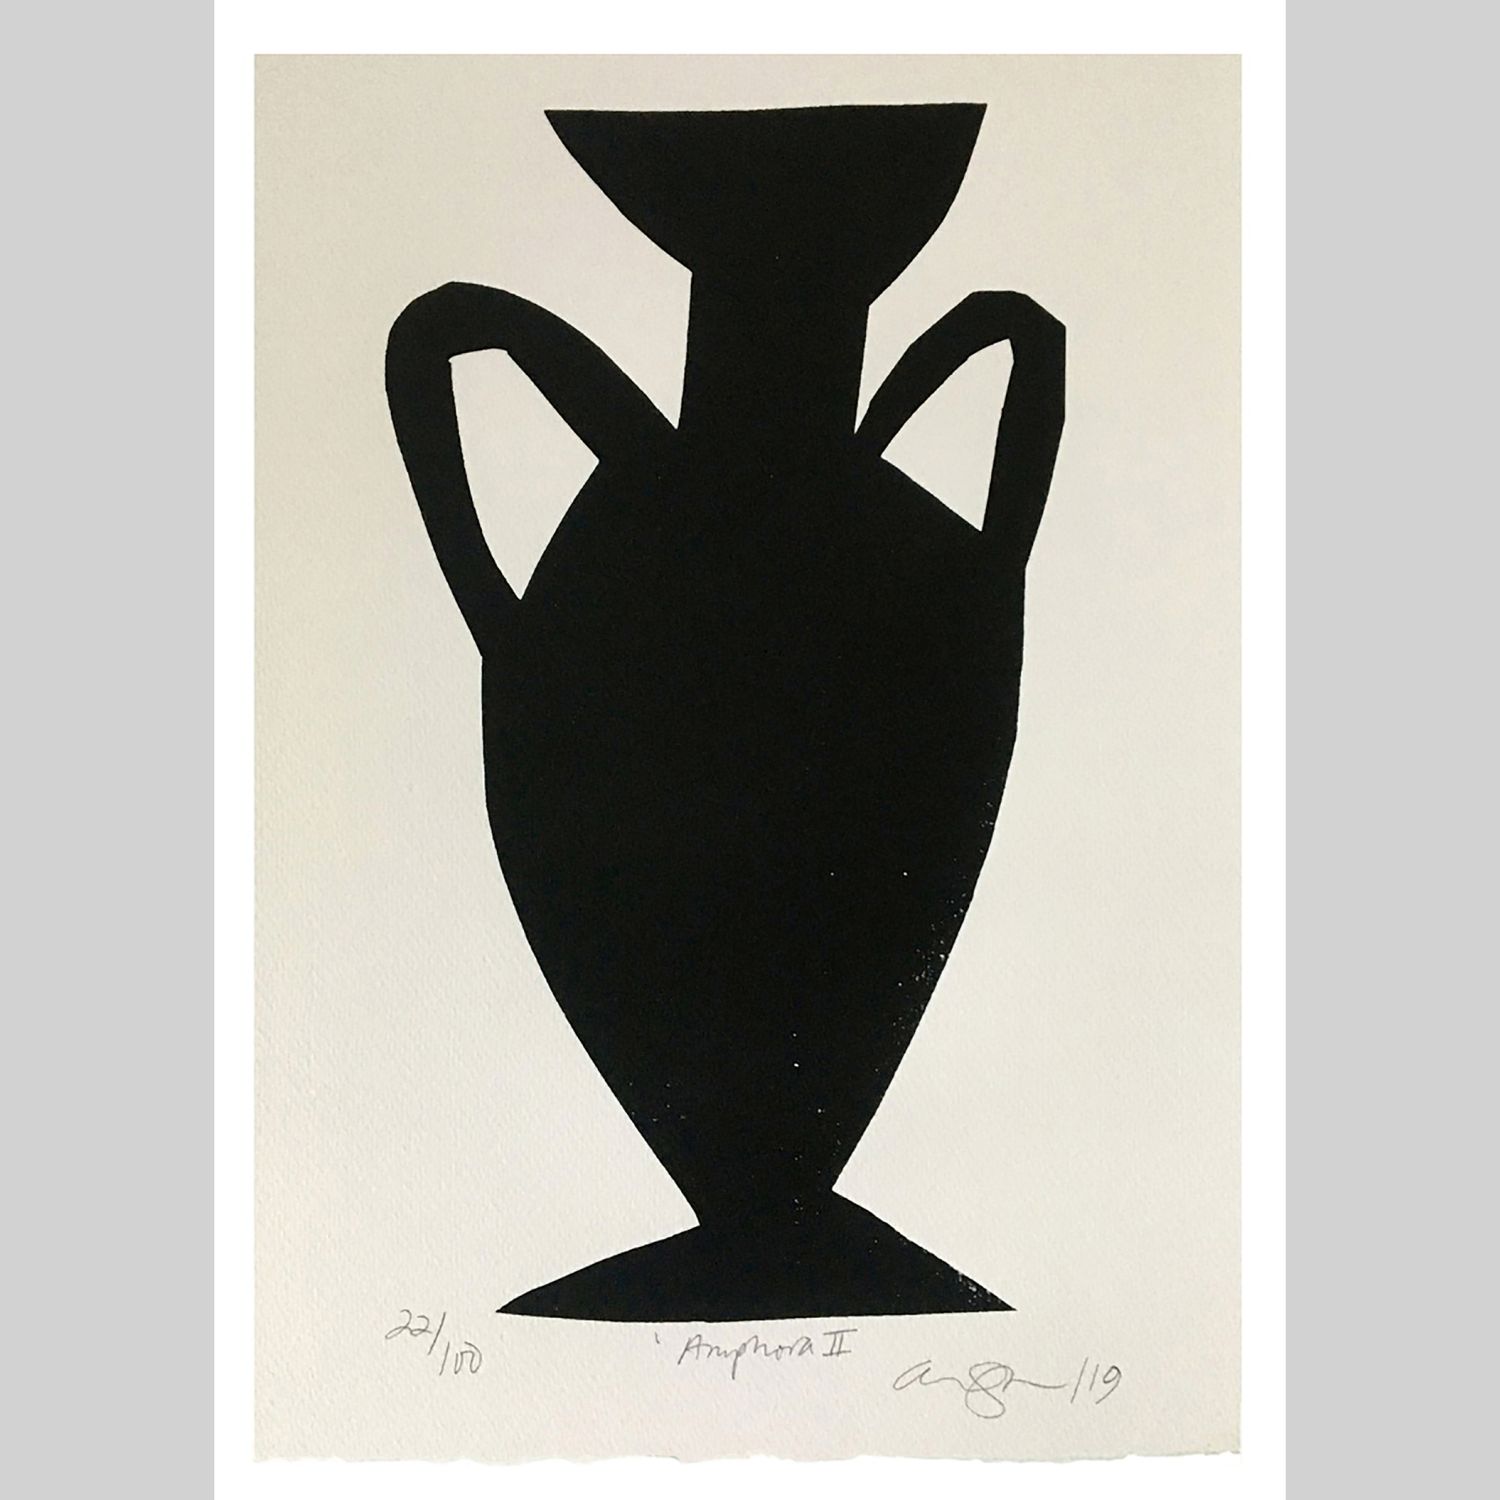 Alanna Cavanagh: Amphora 2 – Silkscreen Print Product Image 1 of 1